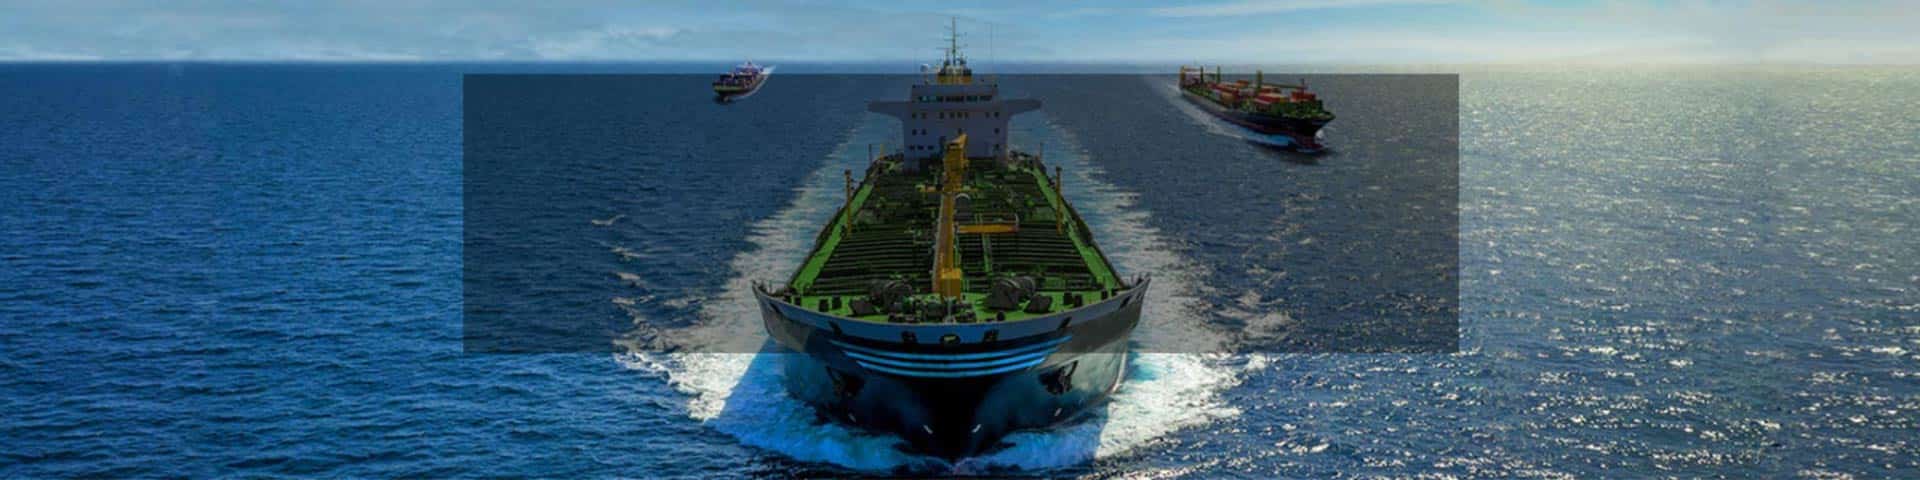 equipements-carburant-marin-methanol-flotte-marchande-FR-hero